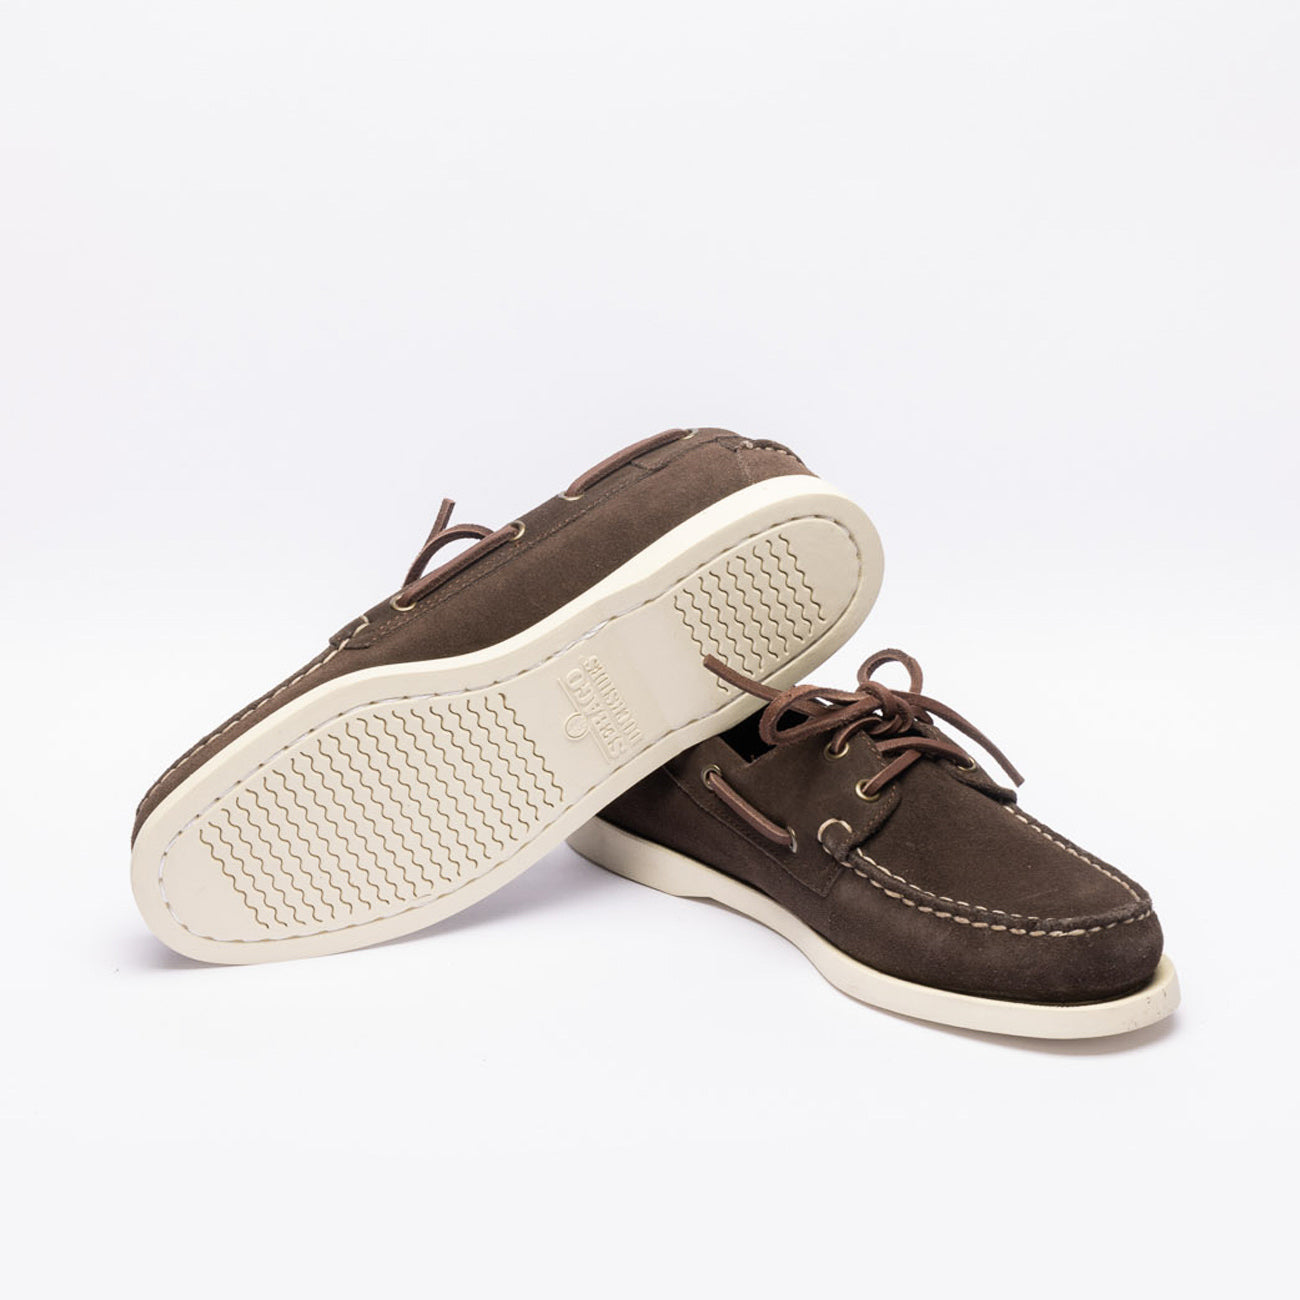 Sebago Portland Flesh Out brown suede boat shoe (Moka brown)